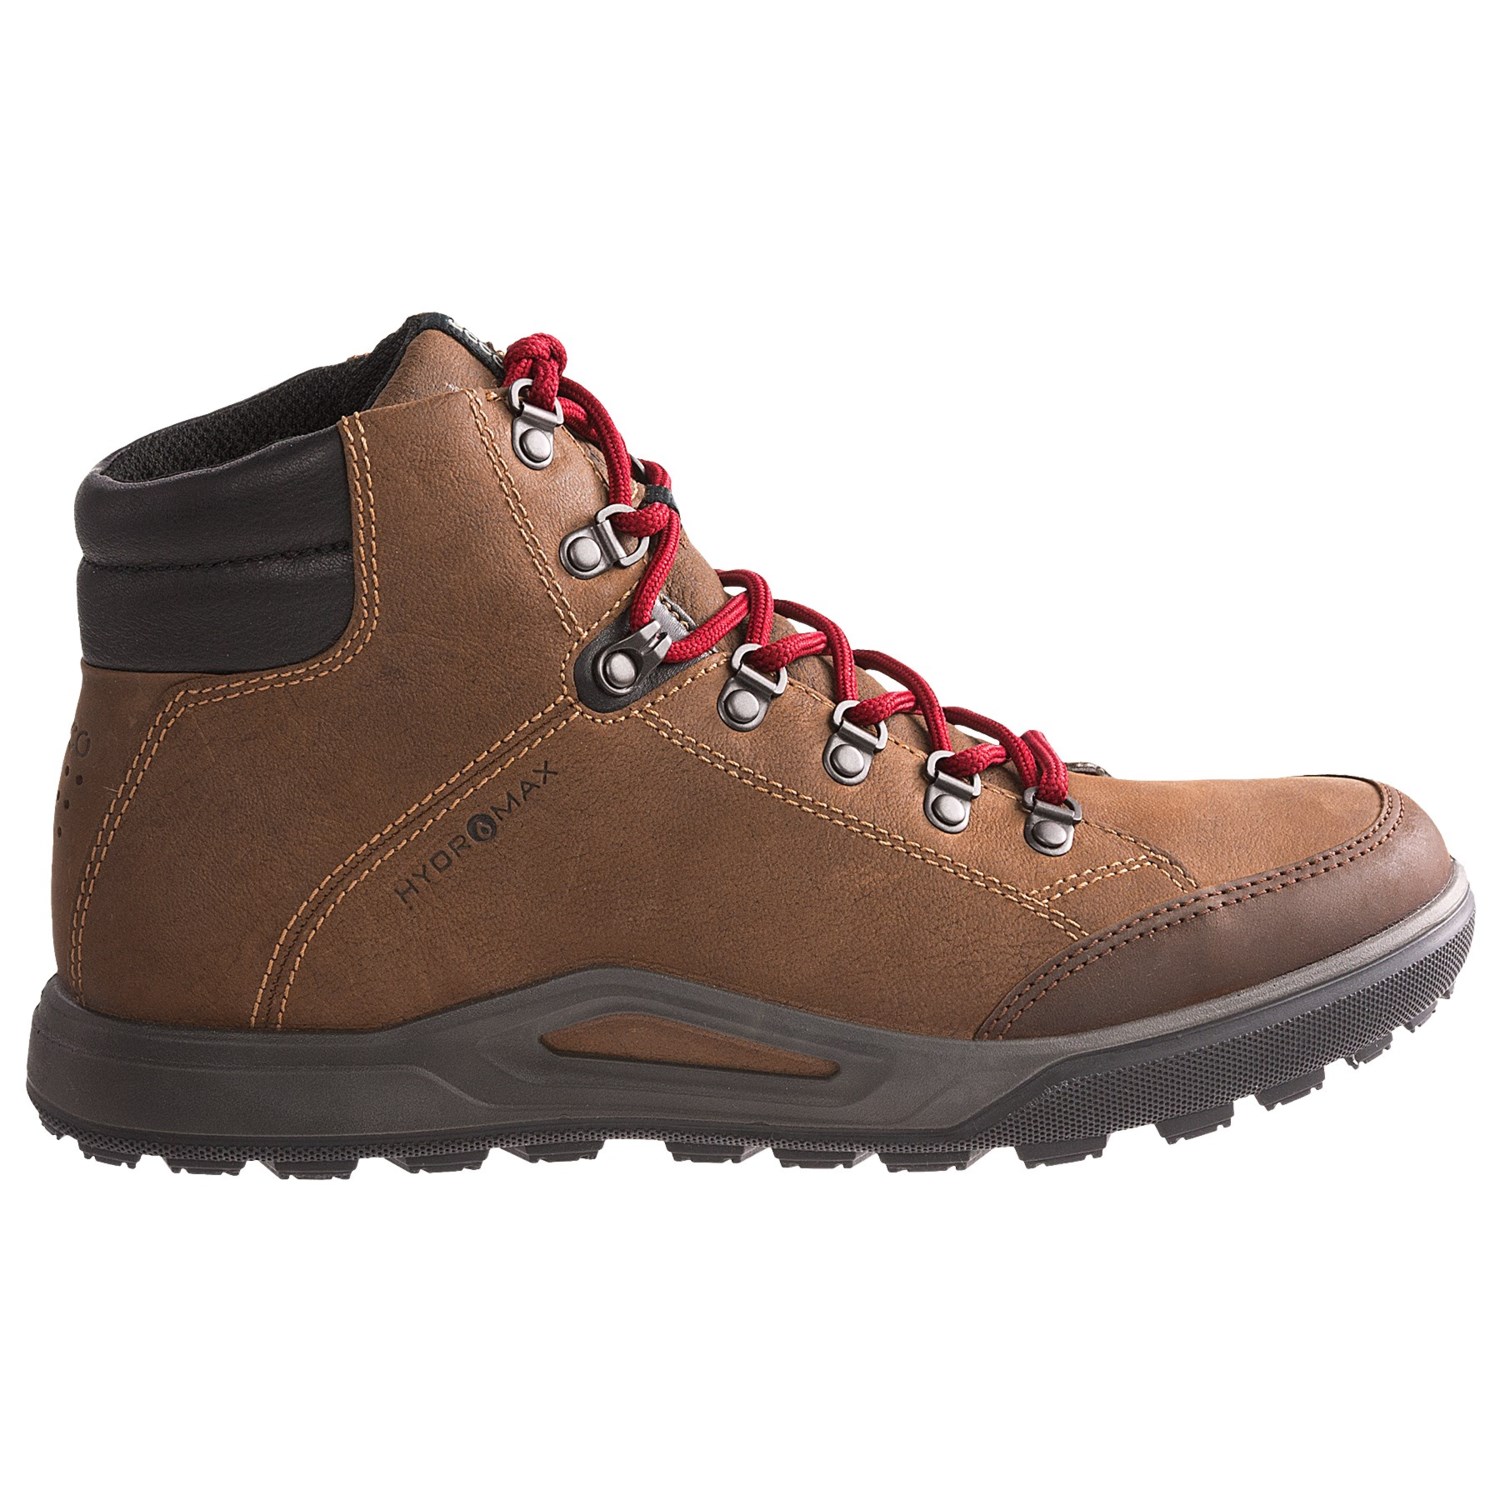 ECCO Street Terrain Boots (For Men) 6255J - Save 32%